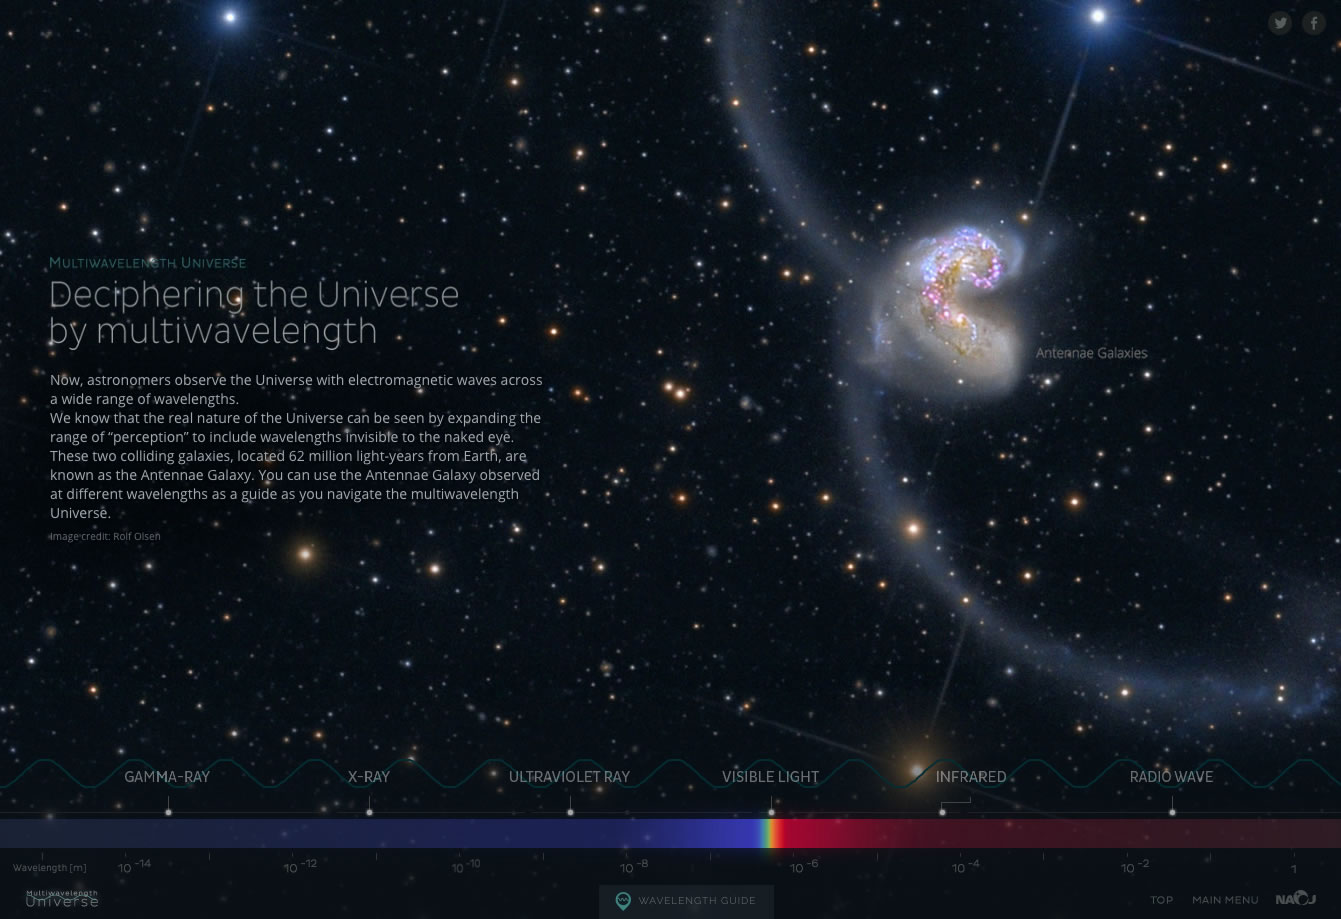 Multiwavelength Universe image